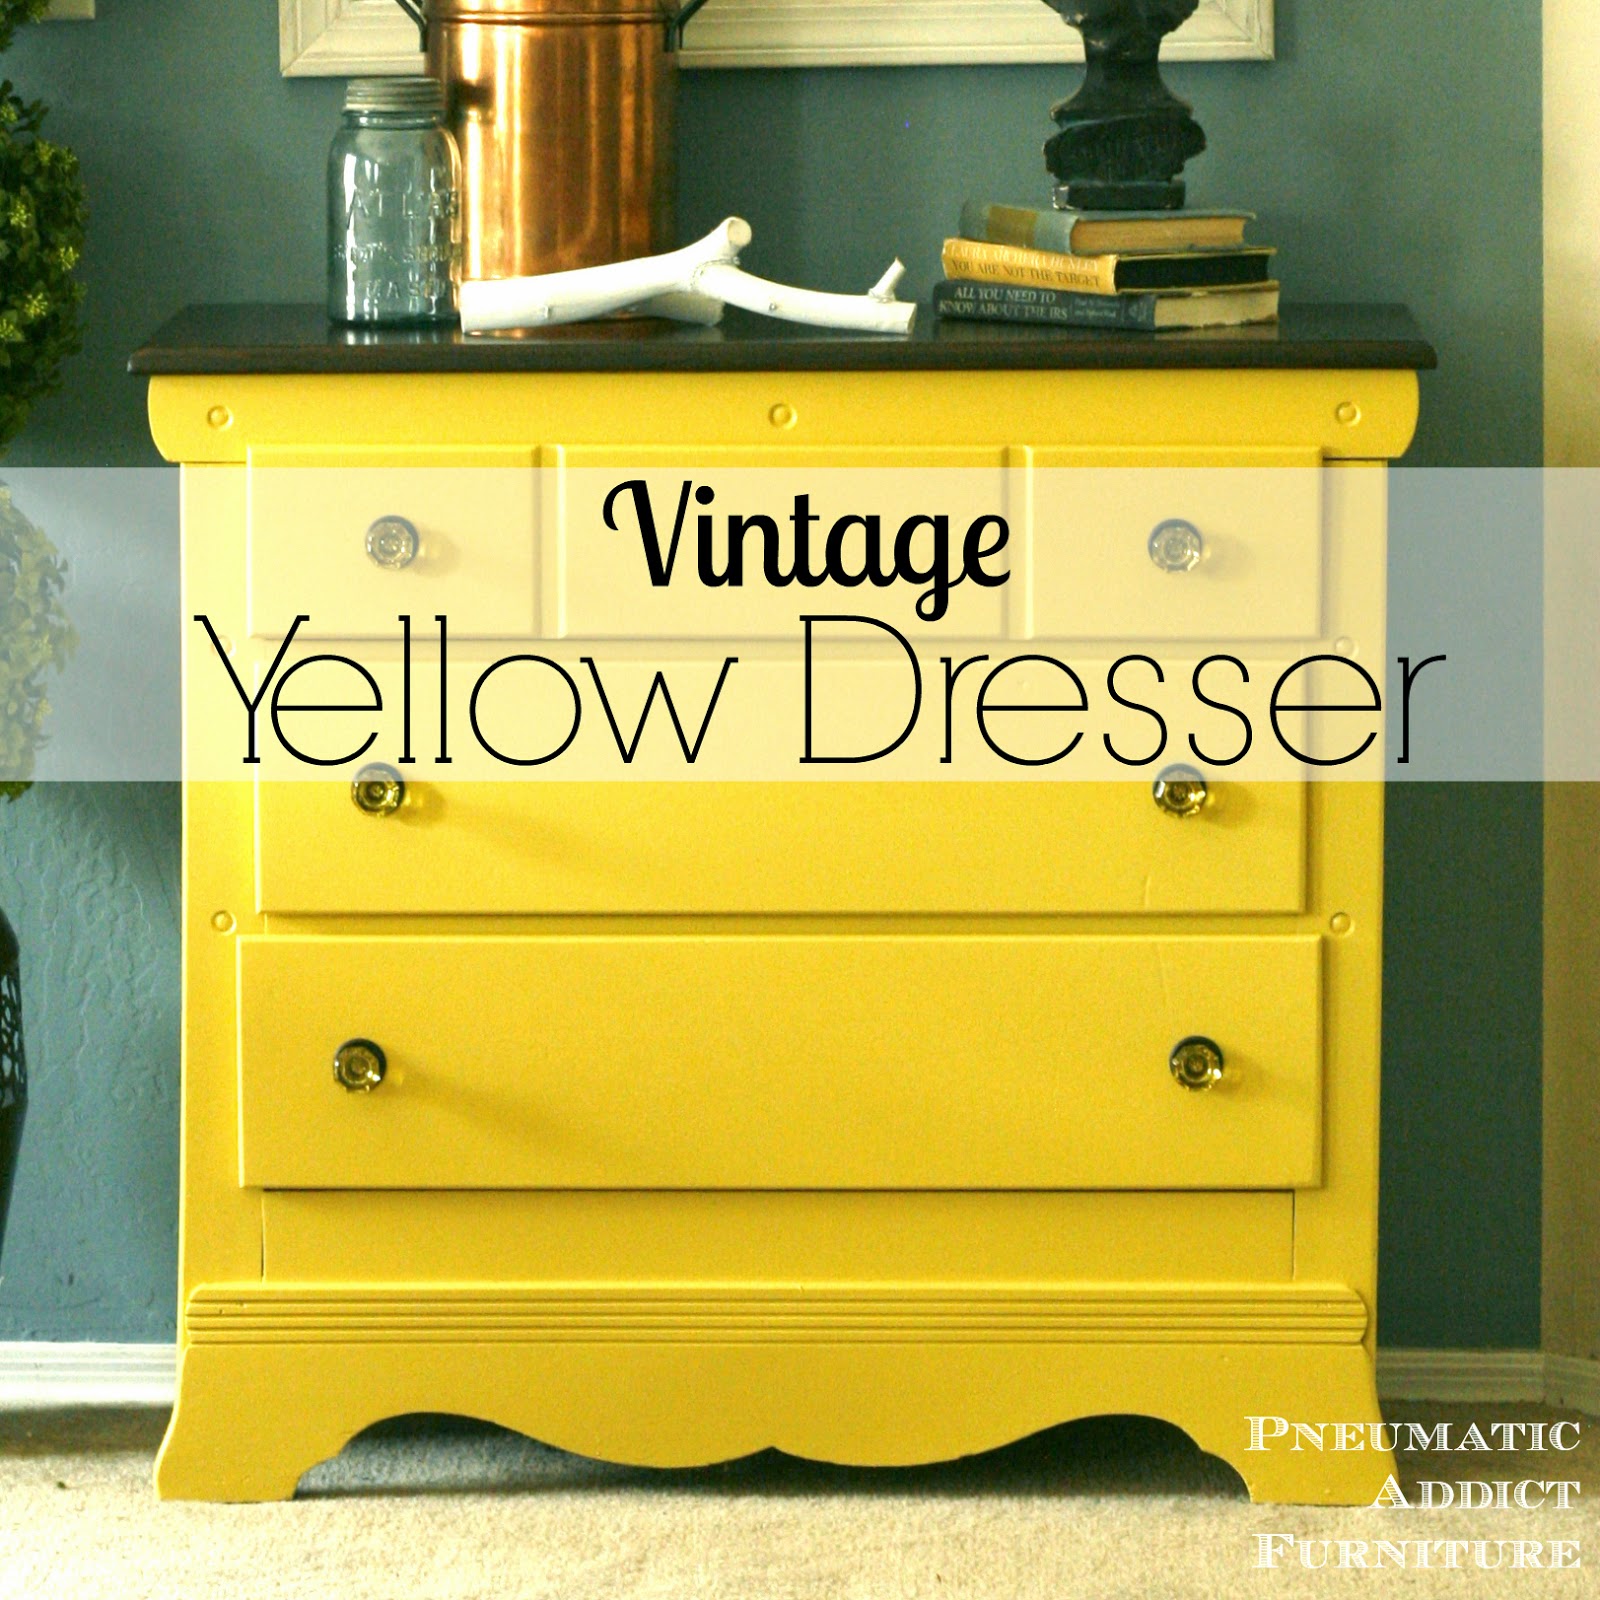 Vintage Yellow Dresser Pneumatic Addict